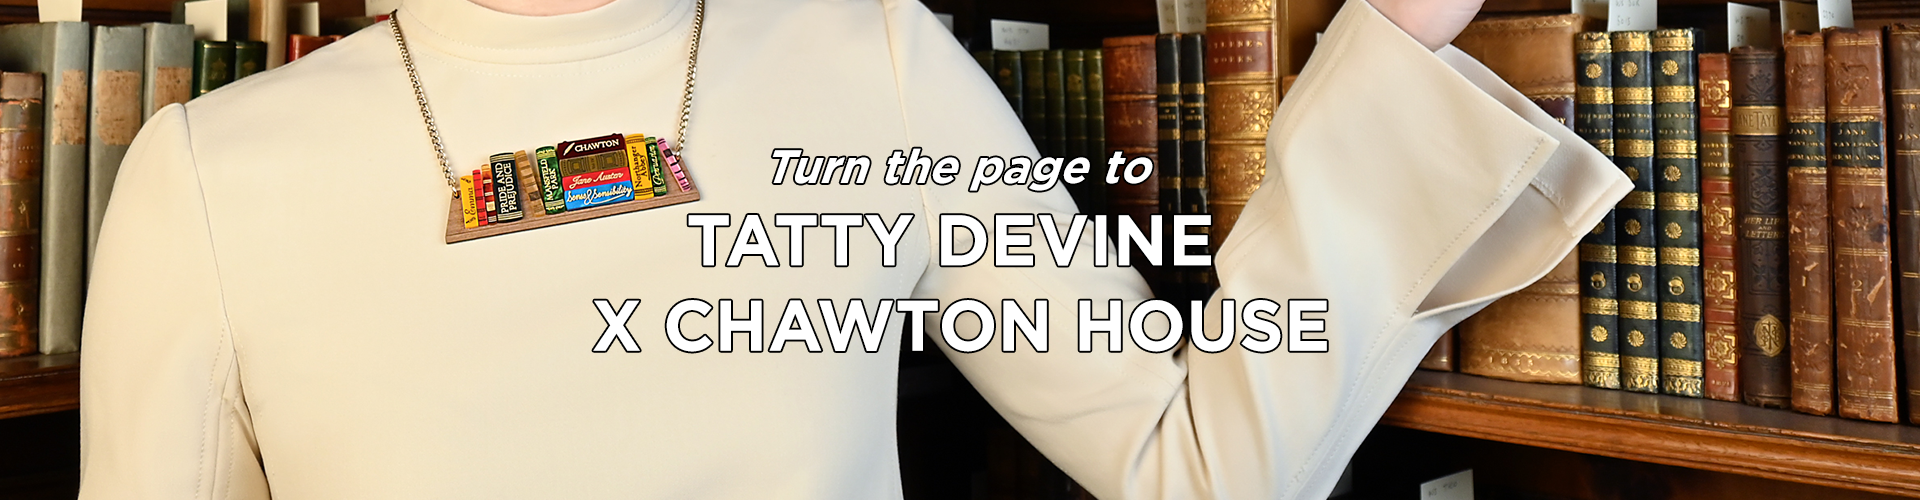 Turn the page to Tatty Devine X Chawton House